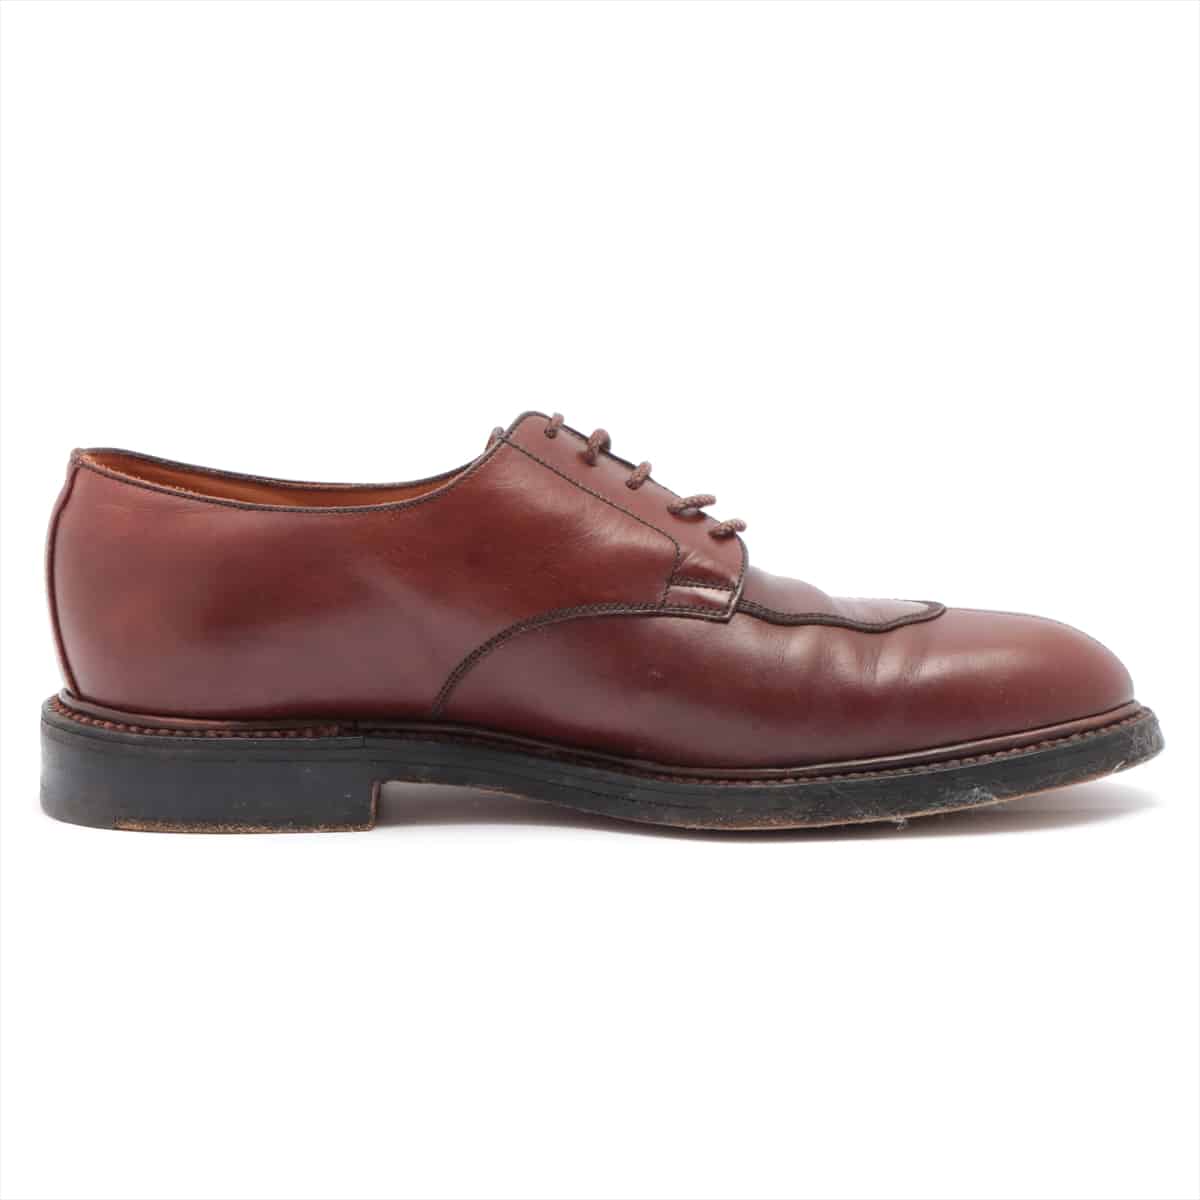 J. M. Weston Leather Leather shoes 7D Men's Brown 598 Roger U-chip